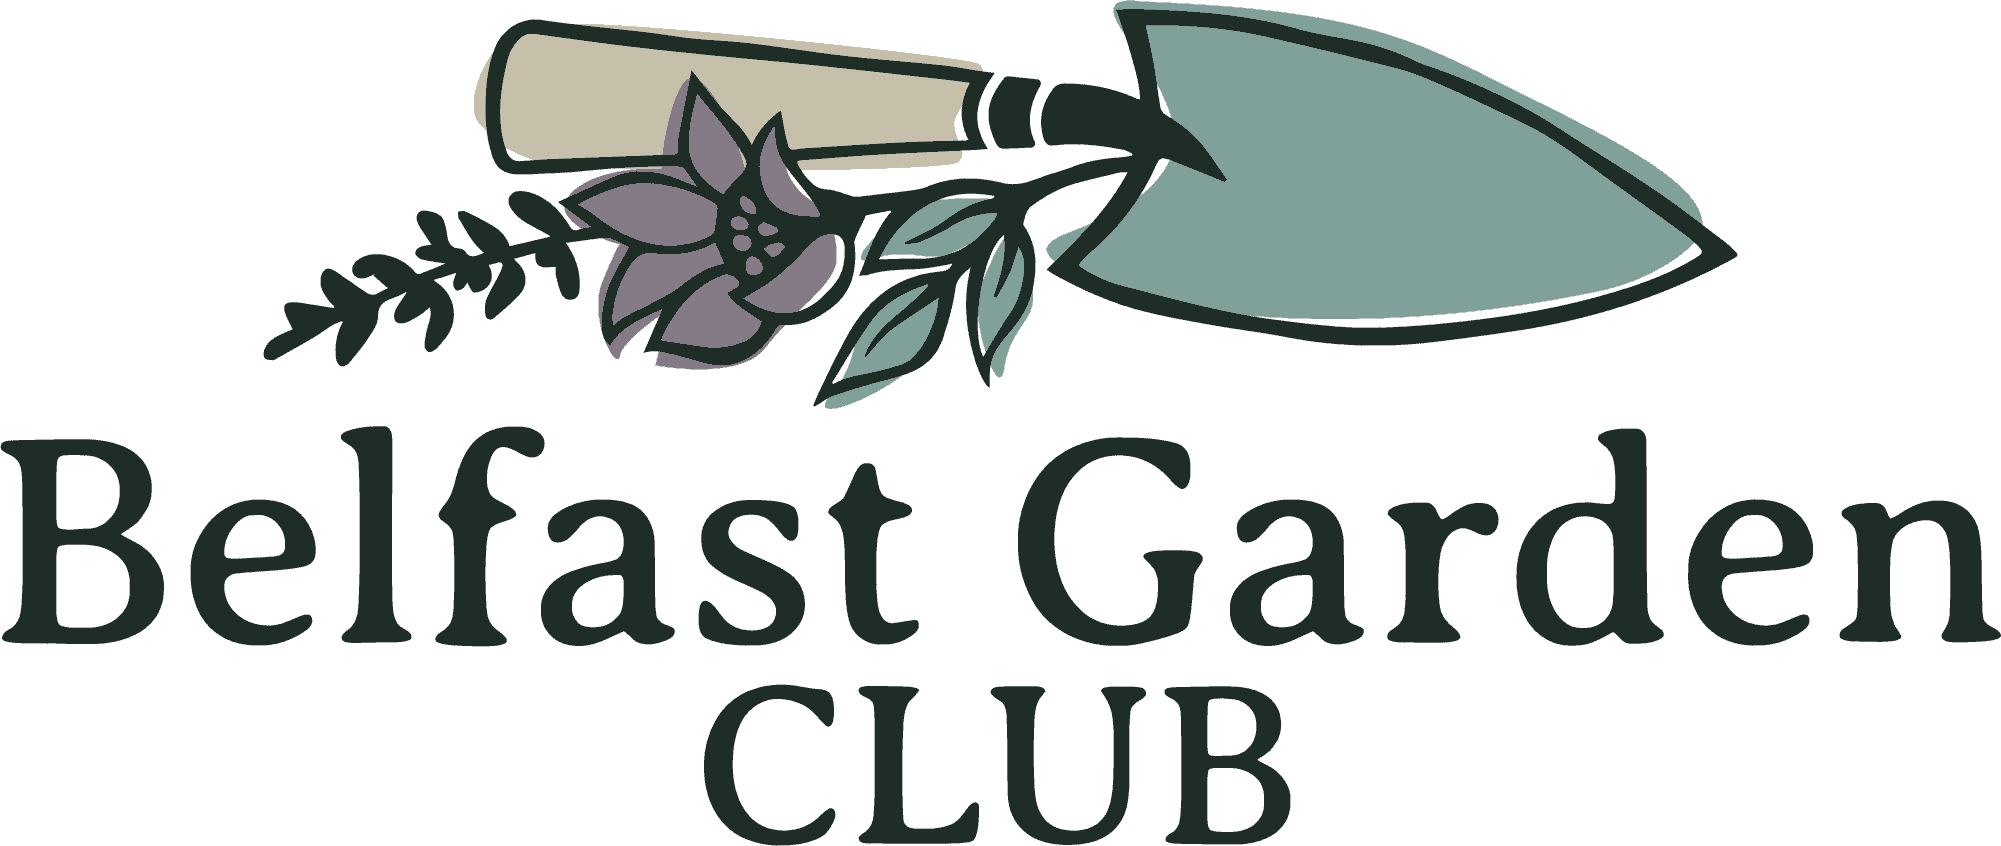 Belfast Garden Club logo